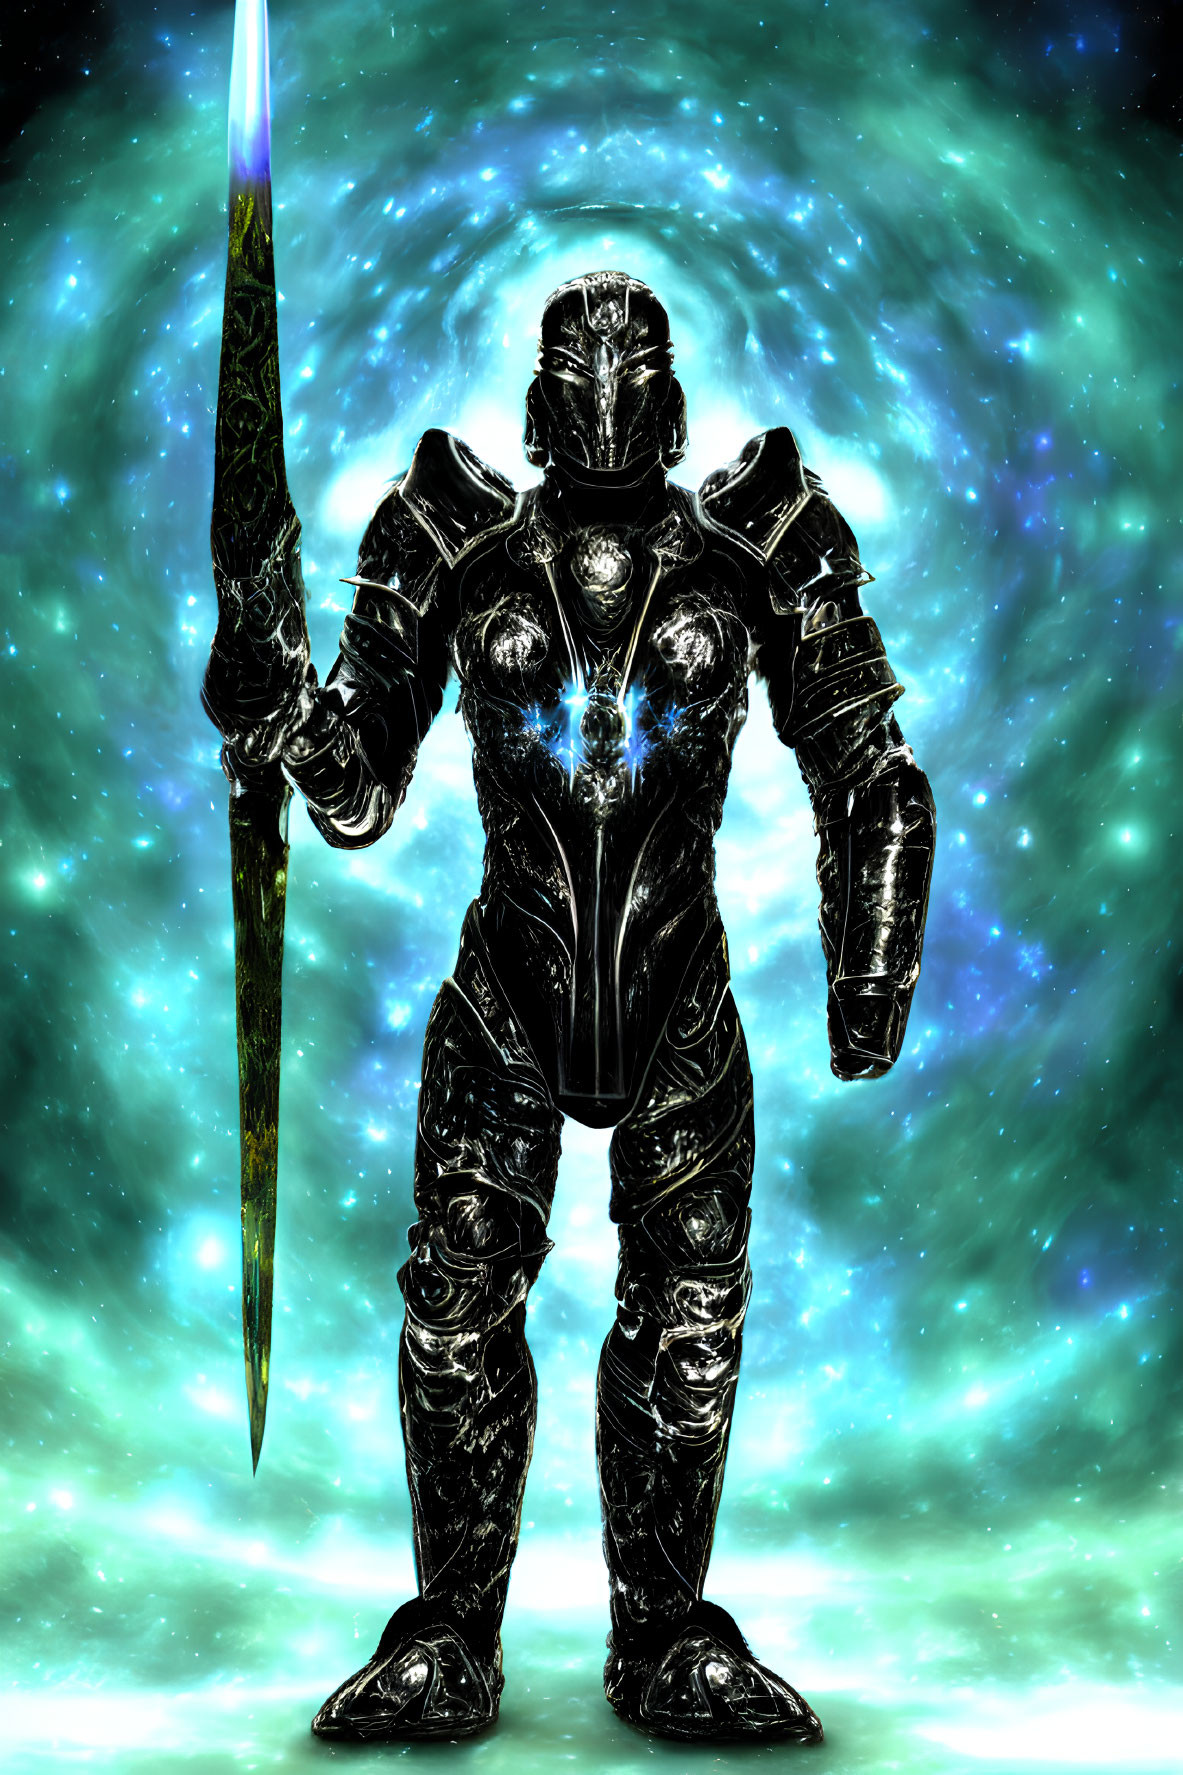 Elaborate dark armor figure with glowing sword on cosmic green backdrop